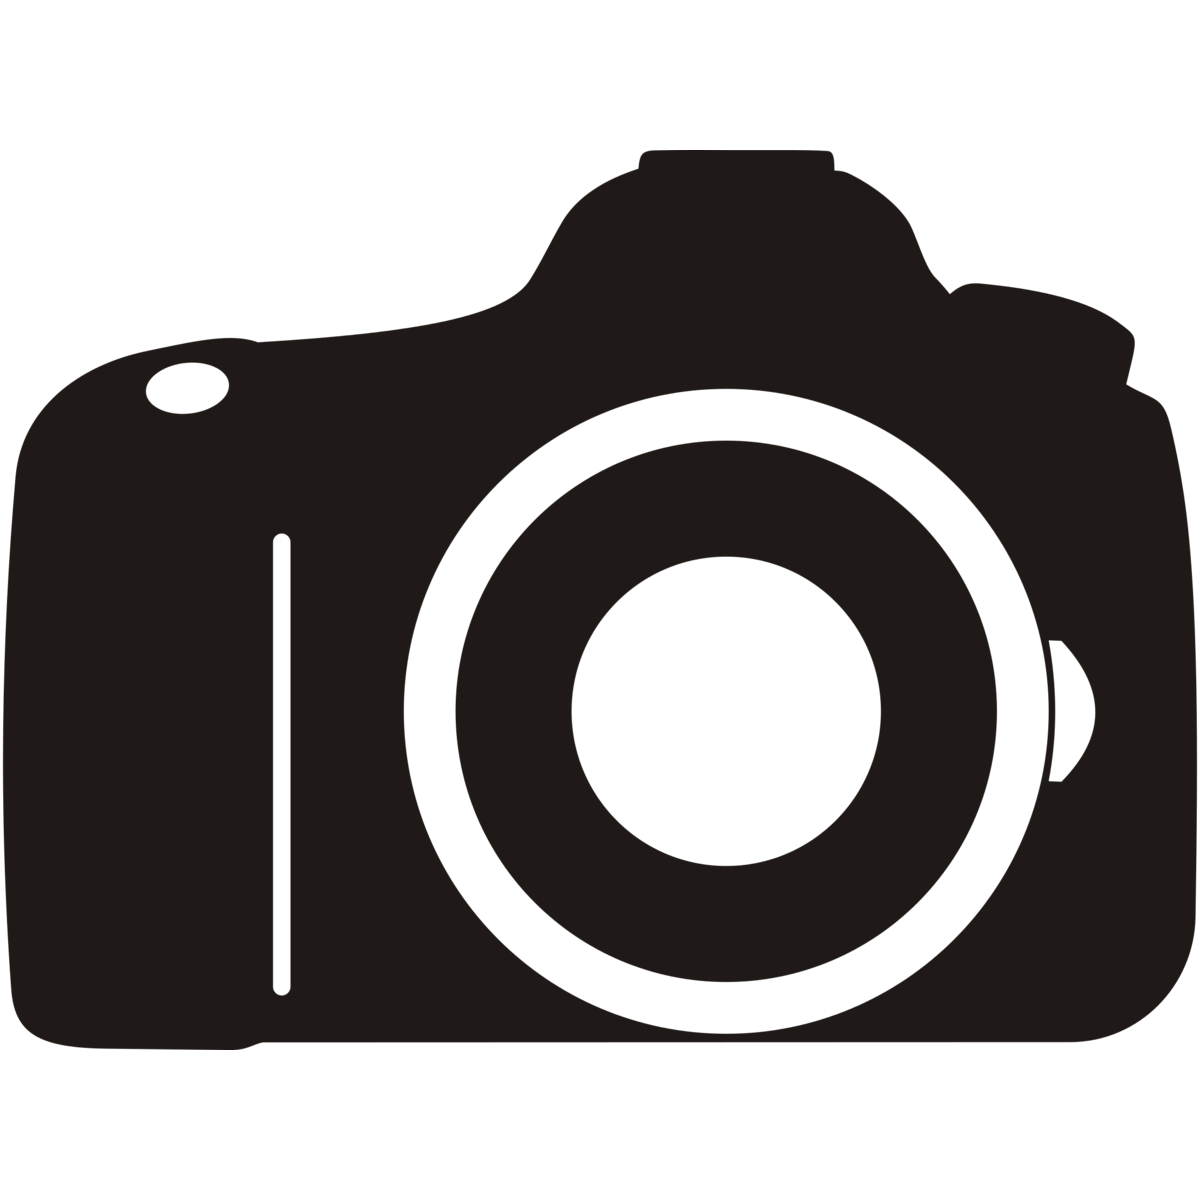 Camera Logo Wallpapers - Top Free Camera Logo Backgrounds - WallpaperAccess